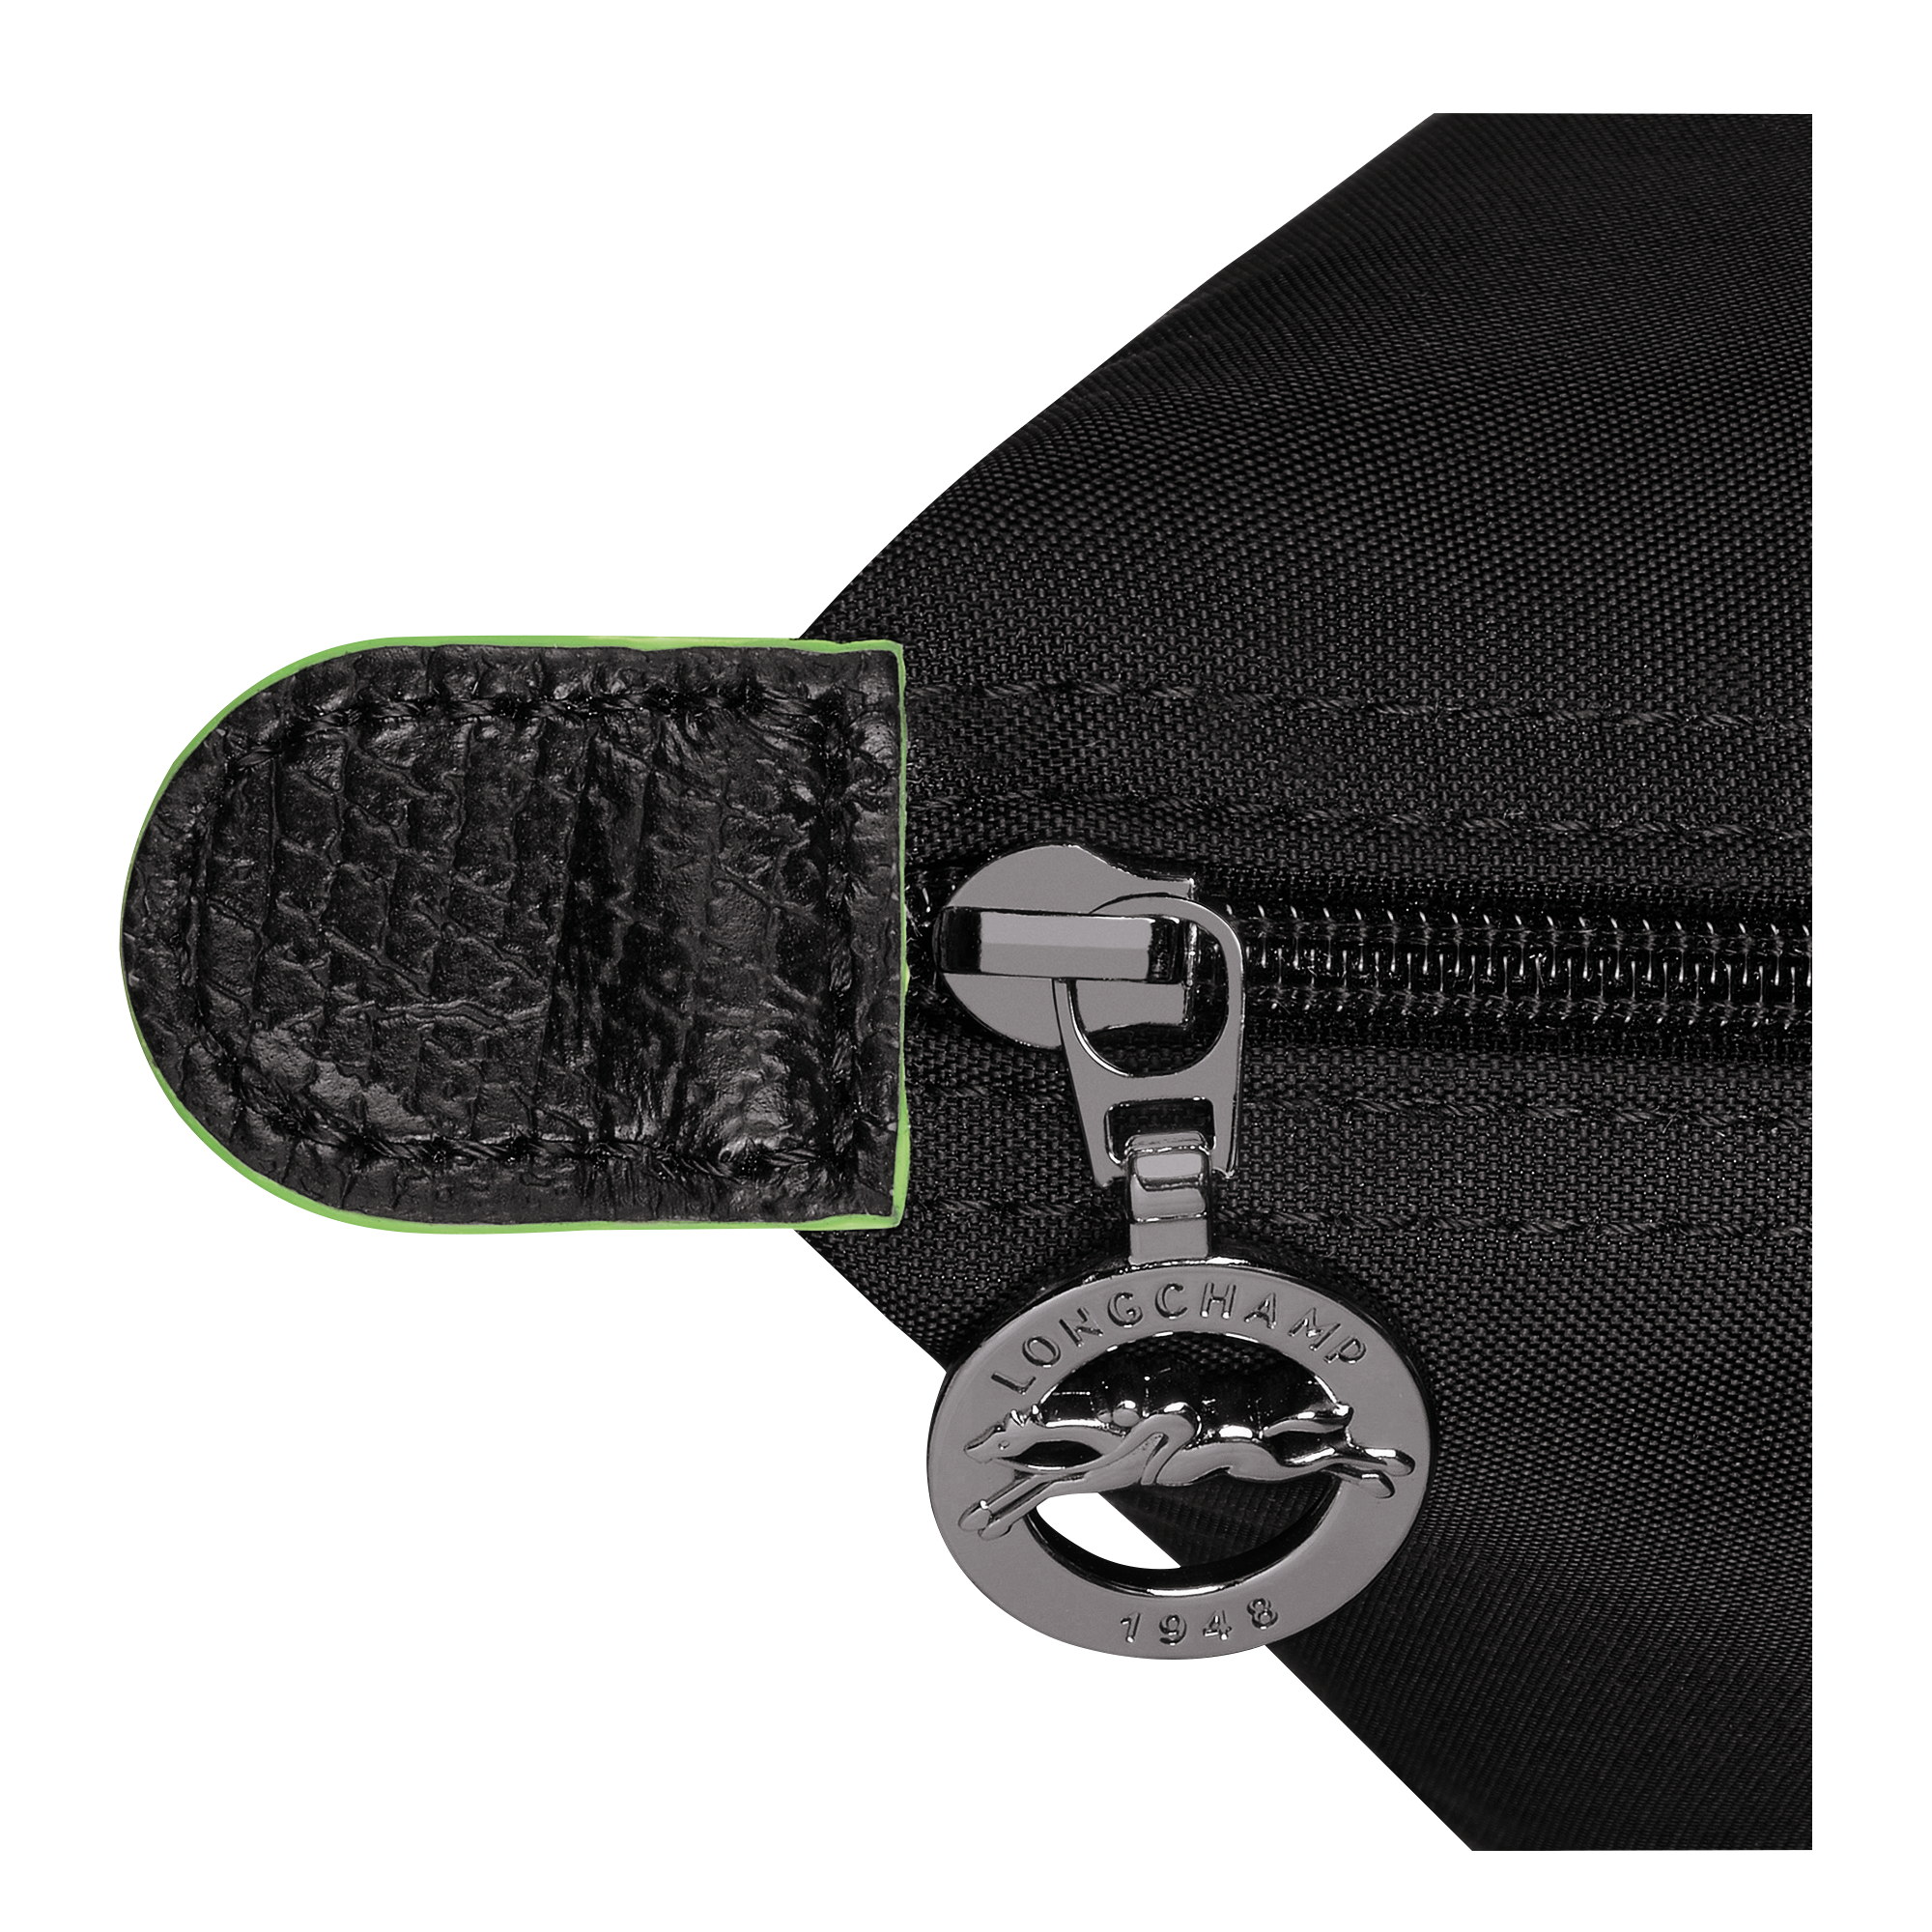 Le Pliage Green Travel bag expandable, Black